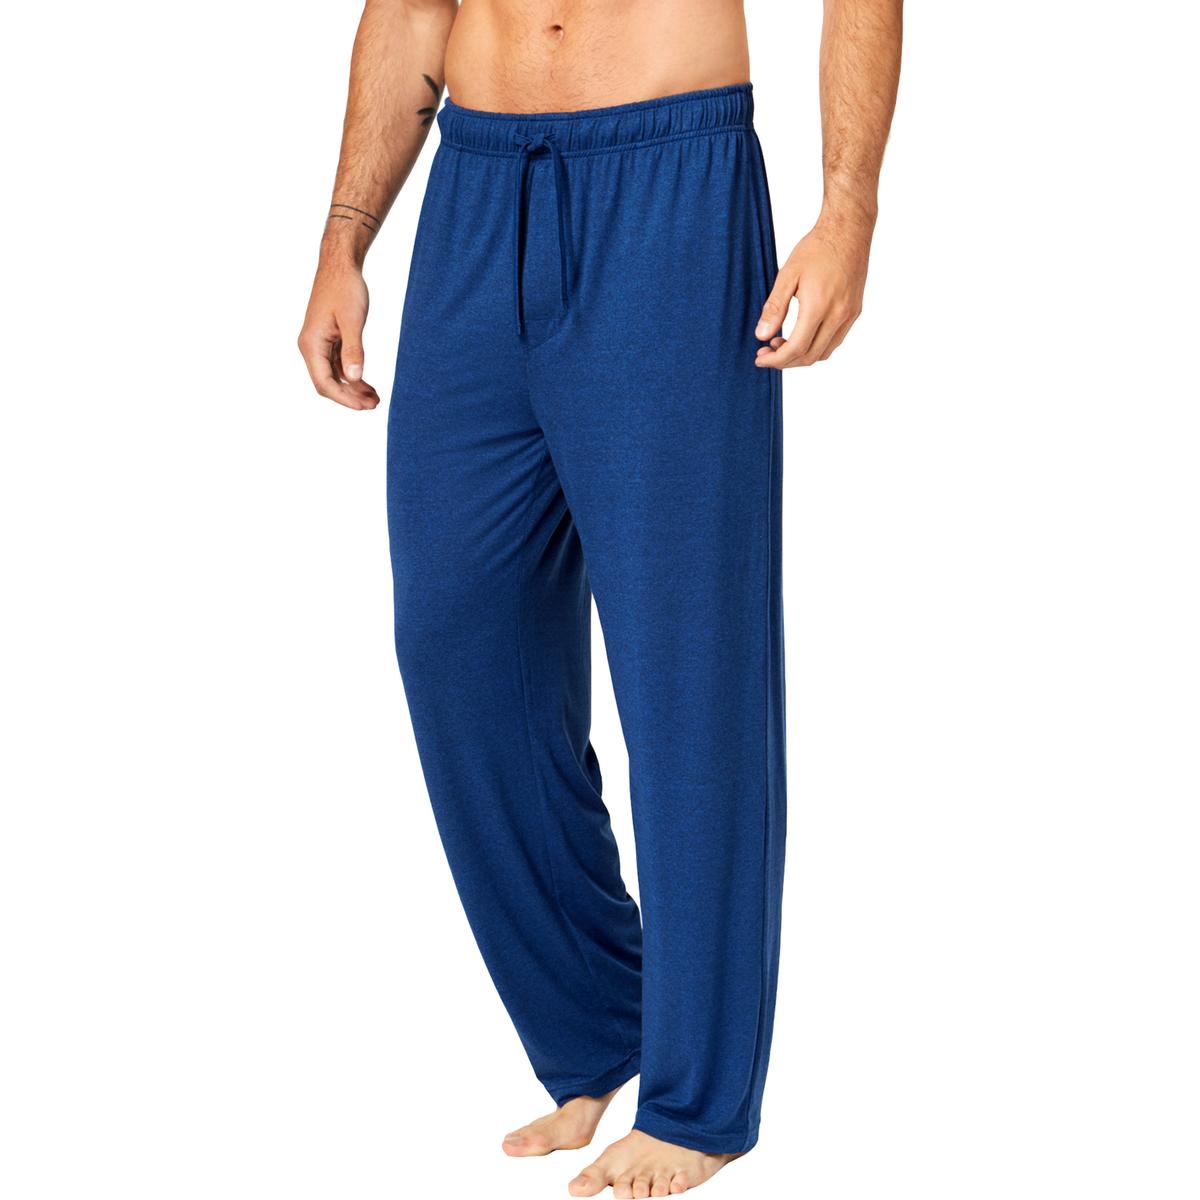 32 Degrees Cool Mens Blue Casual Soft Sweatpants Lounge Pants S BHFO ...